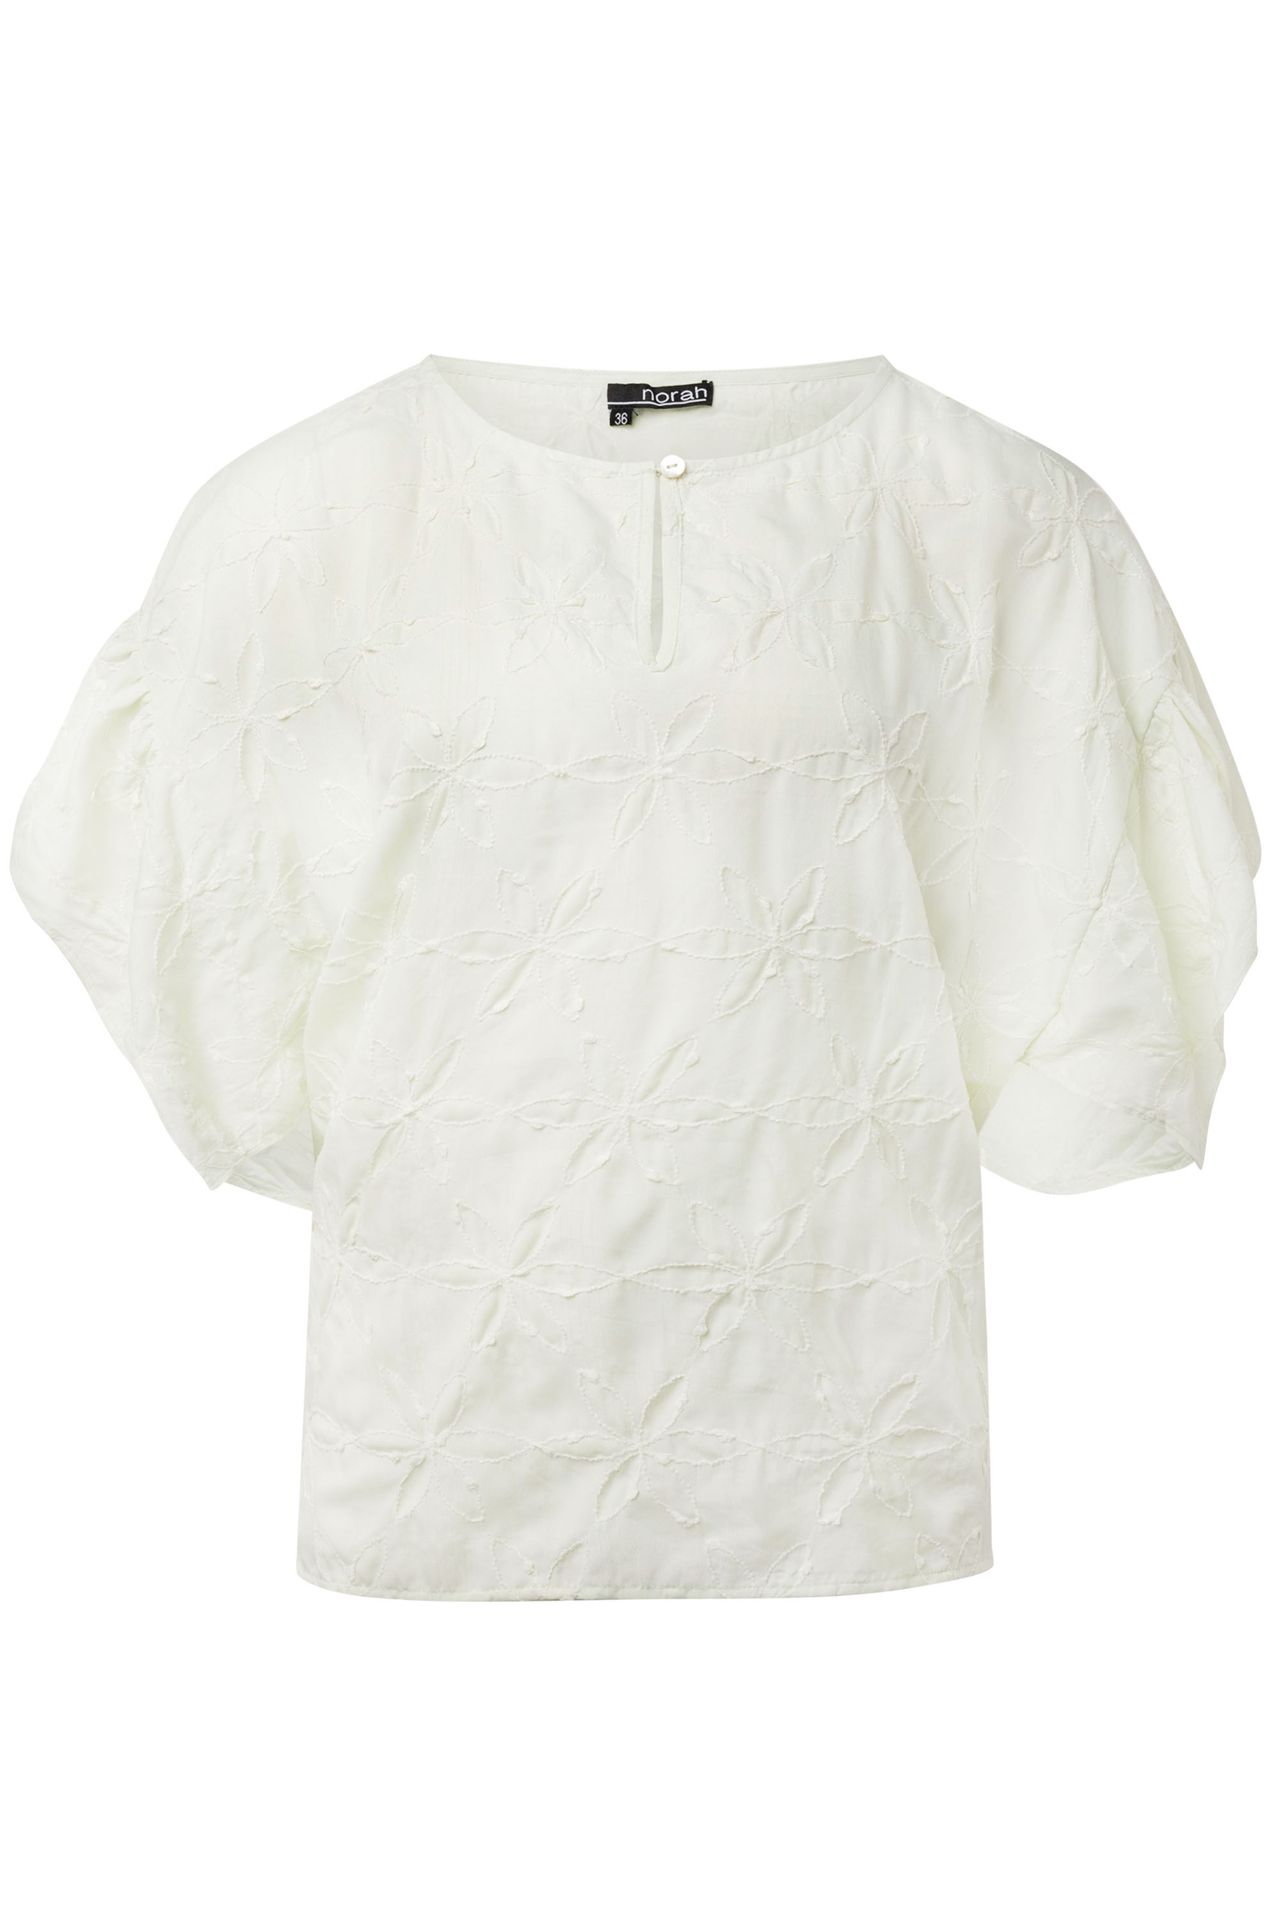 Norah Mintgroene blouse mint 214844-502